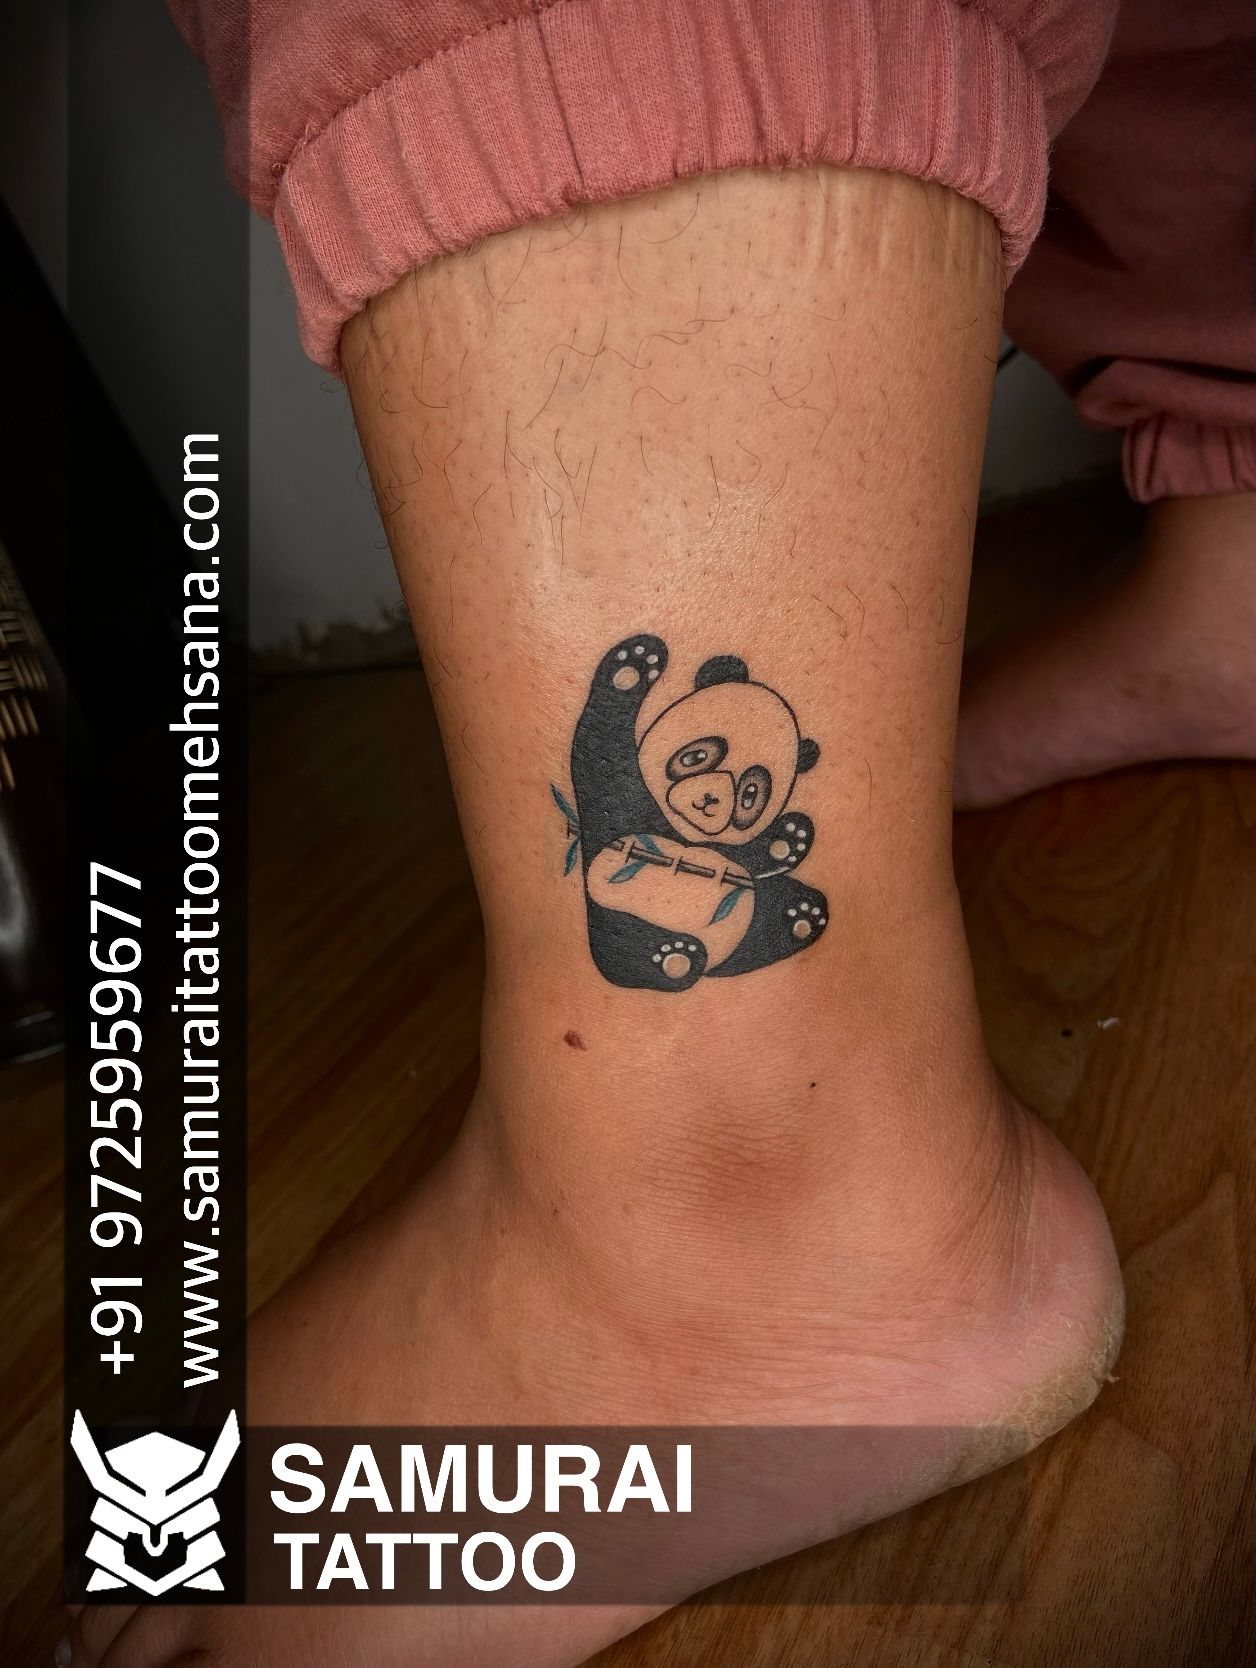 Mini panda tattoo done on the wrist